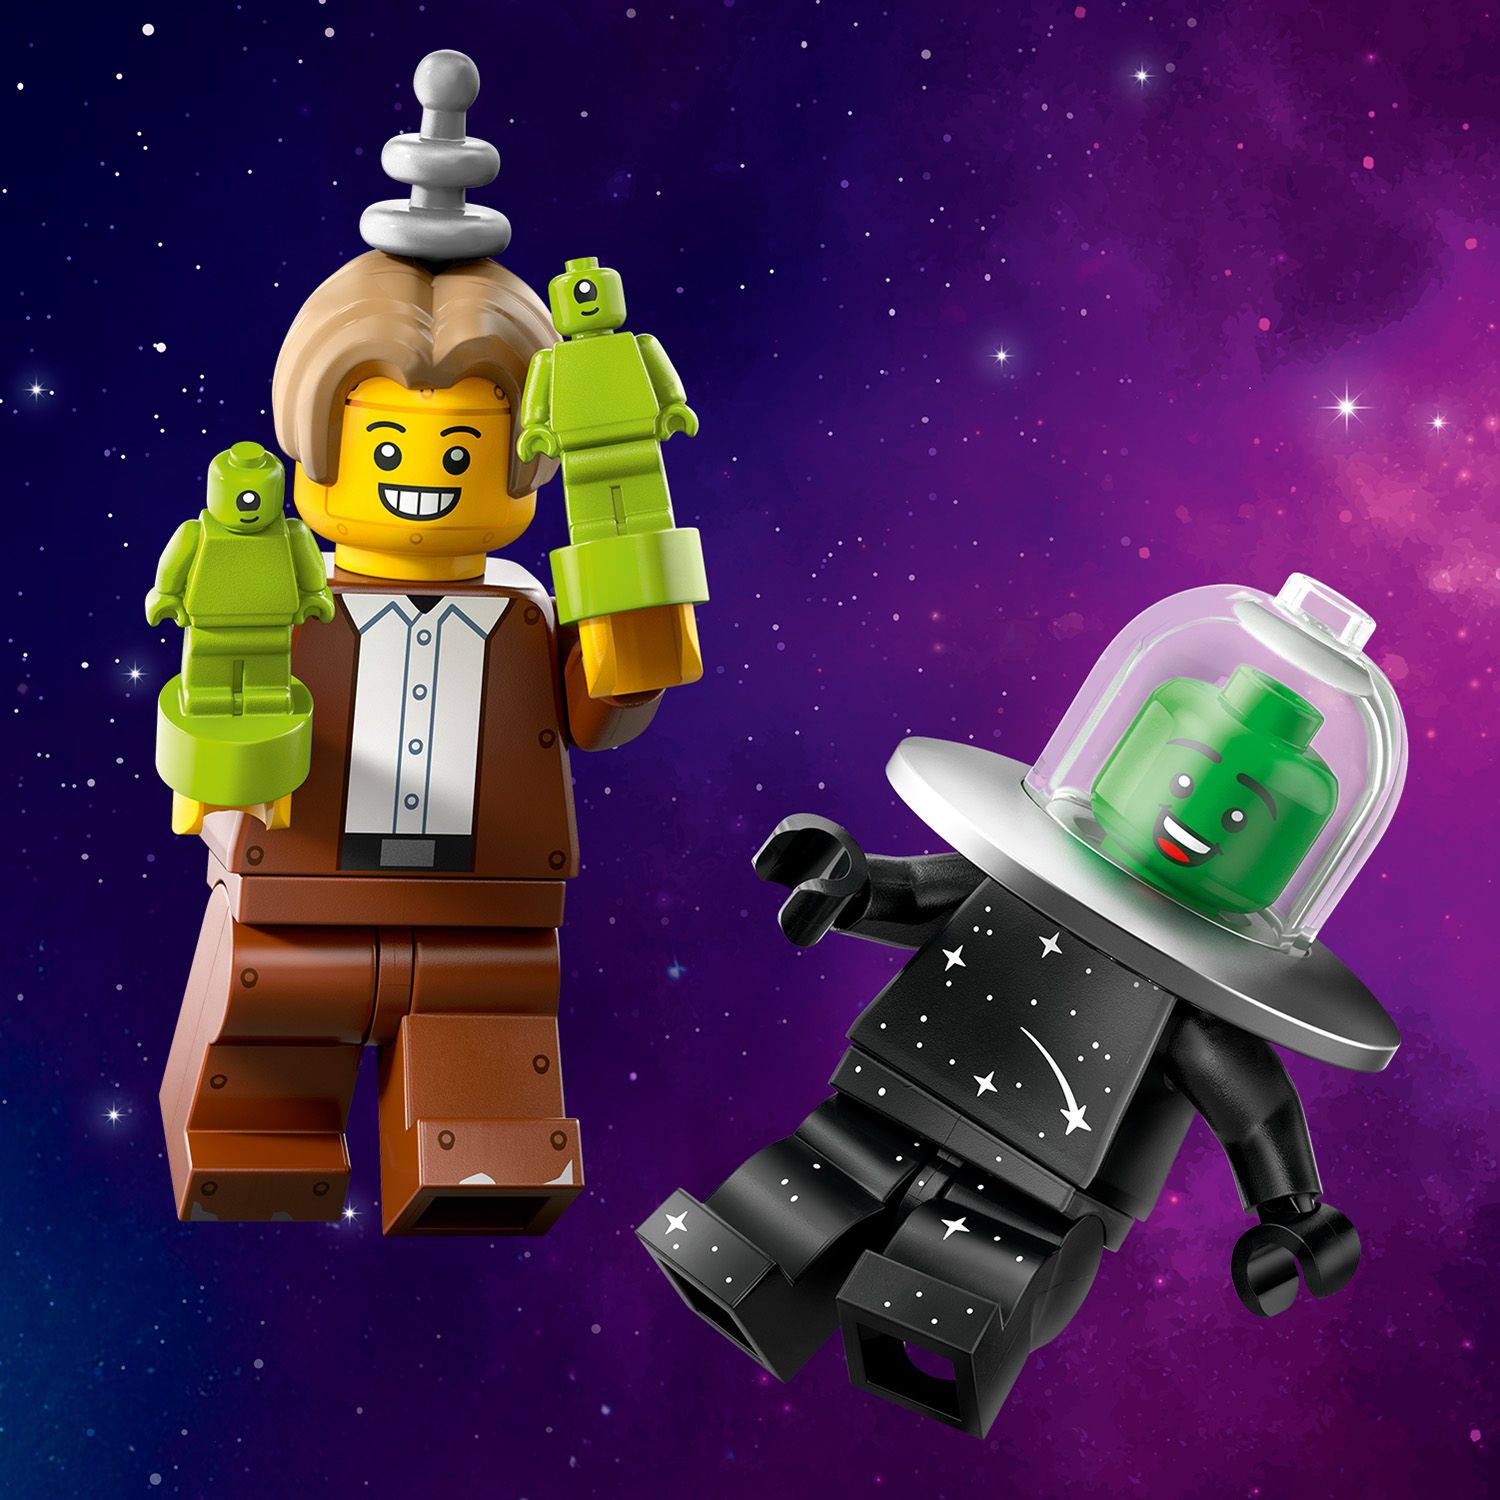 LEGO 71046 Minifiguren Weltraum Serie 26